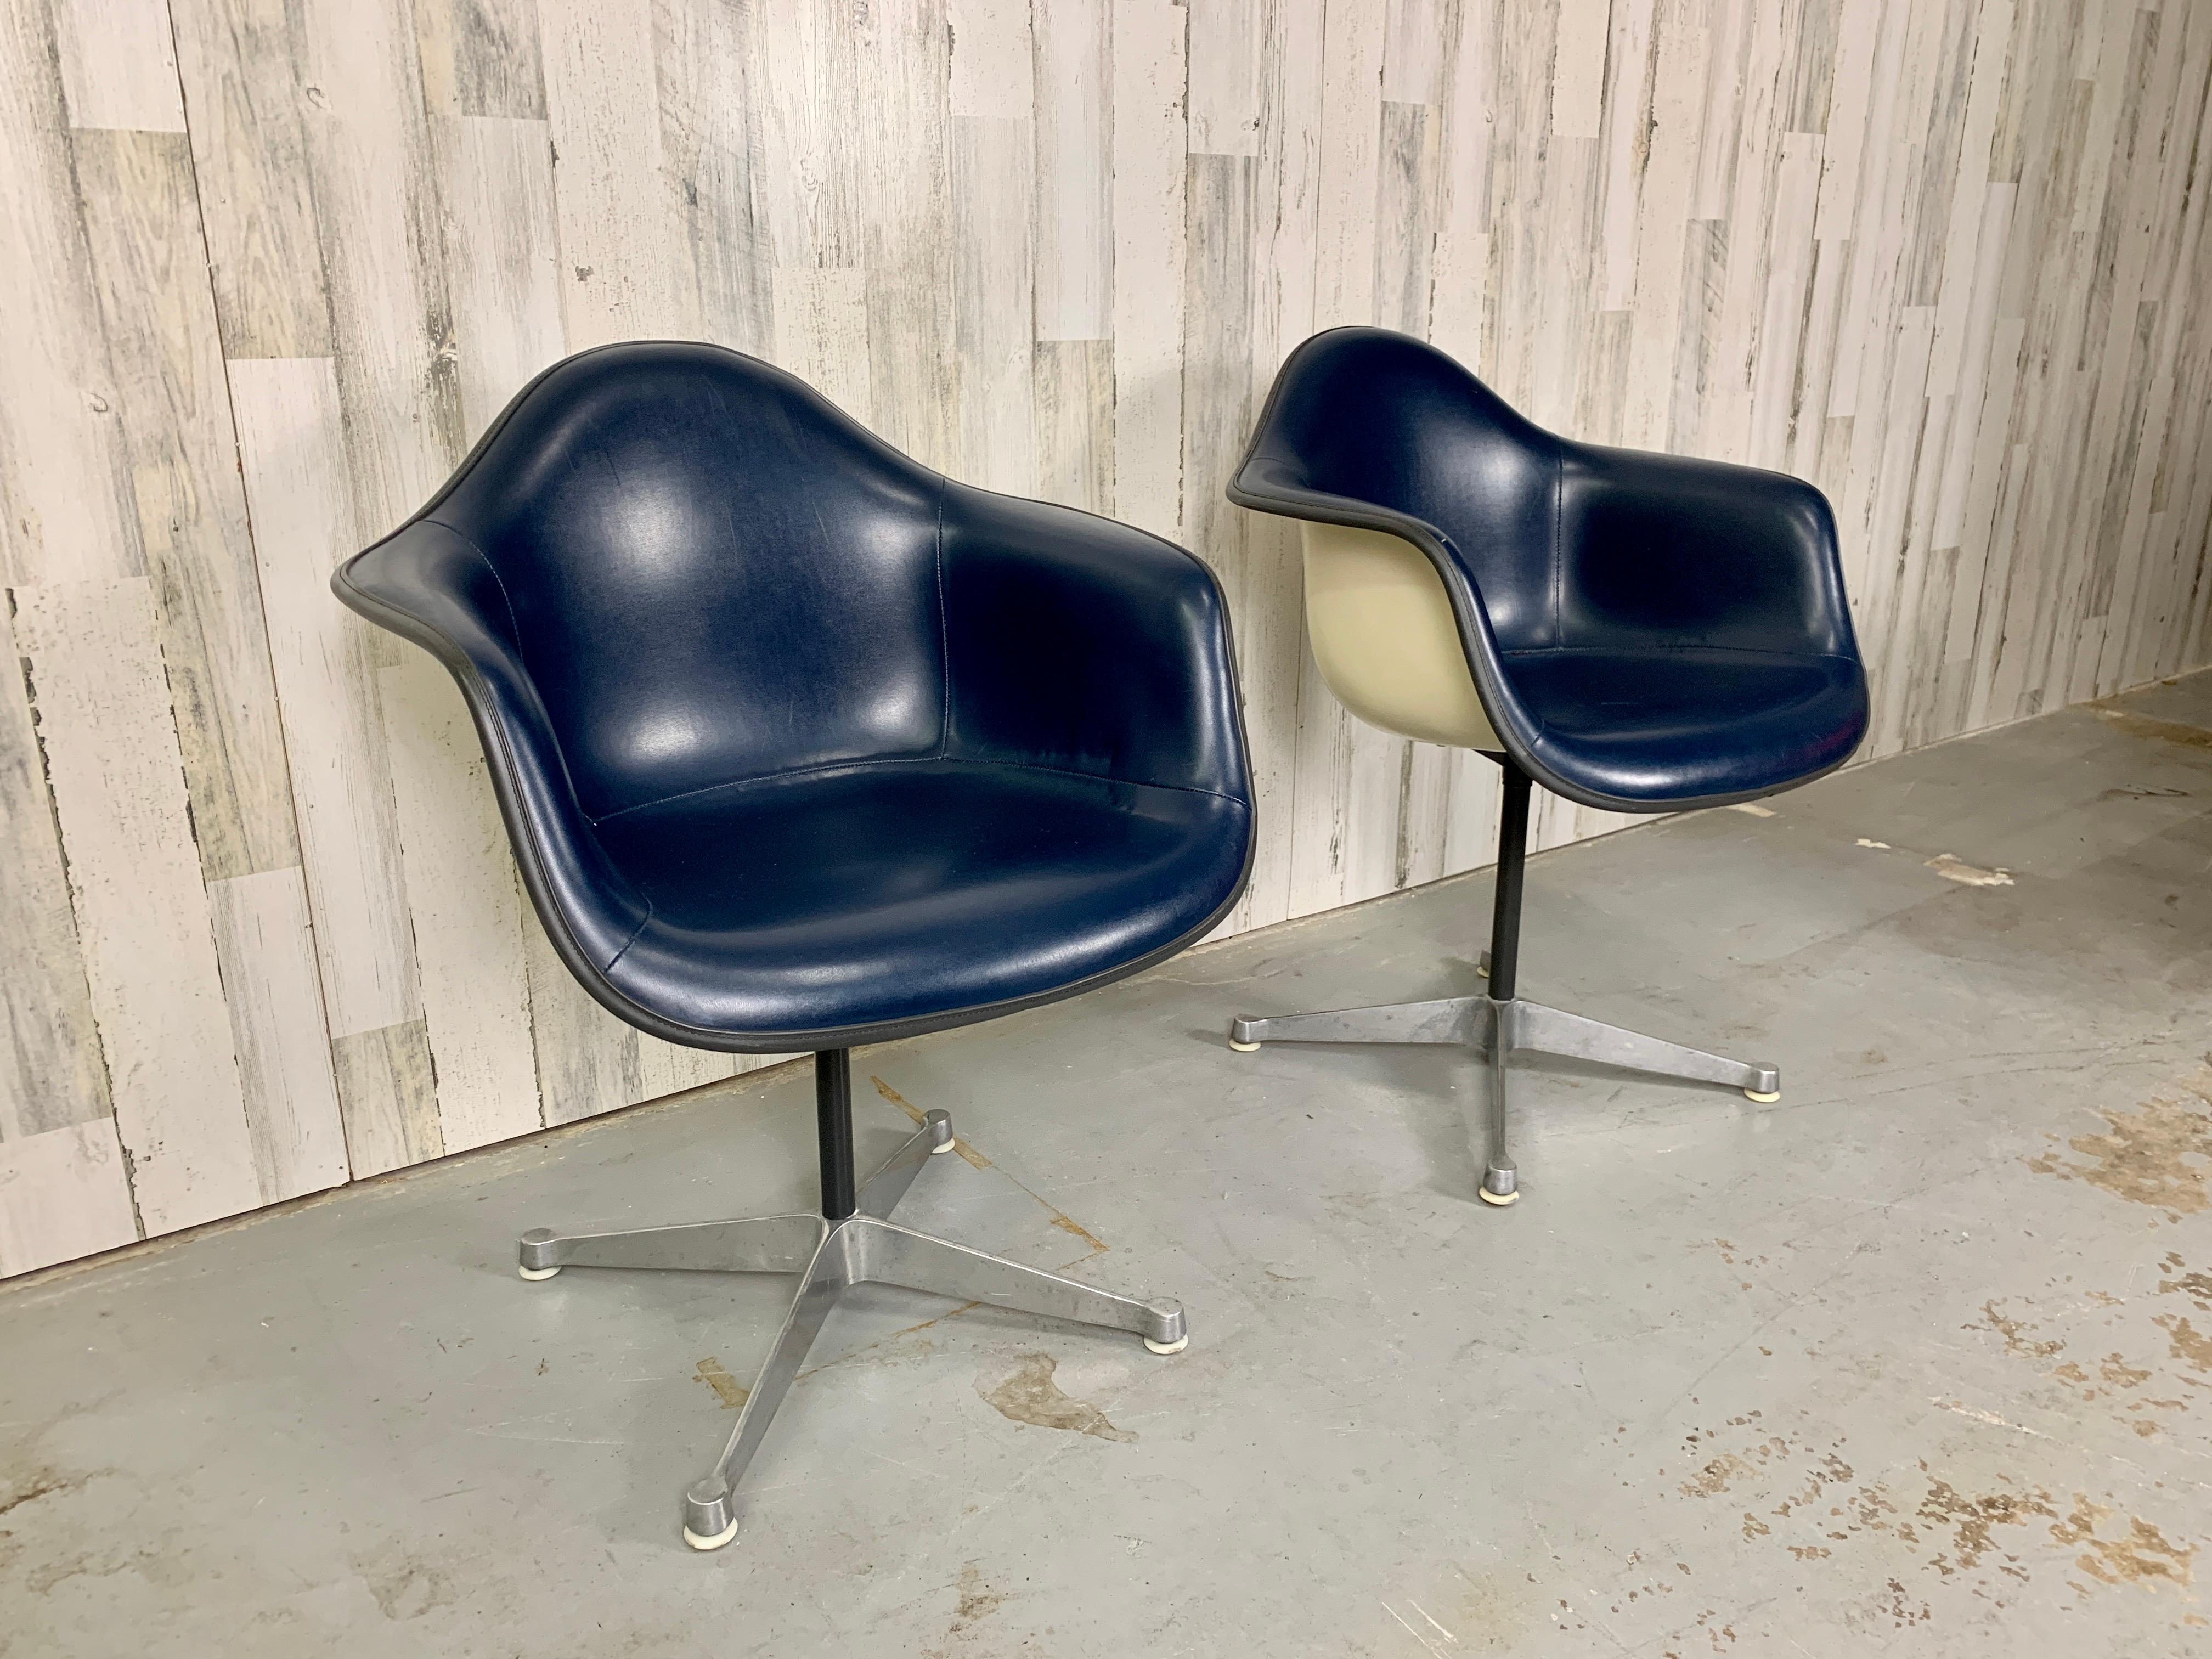 Iconic Eames for Herman Miller fiberglass shell chairs with original dark blue vinyl padded upholstery.